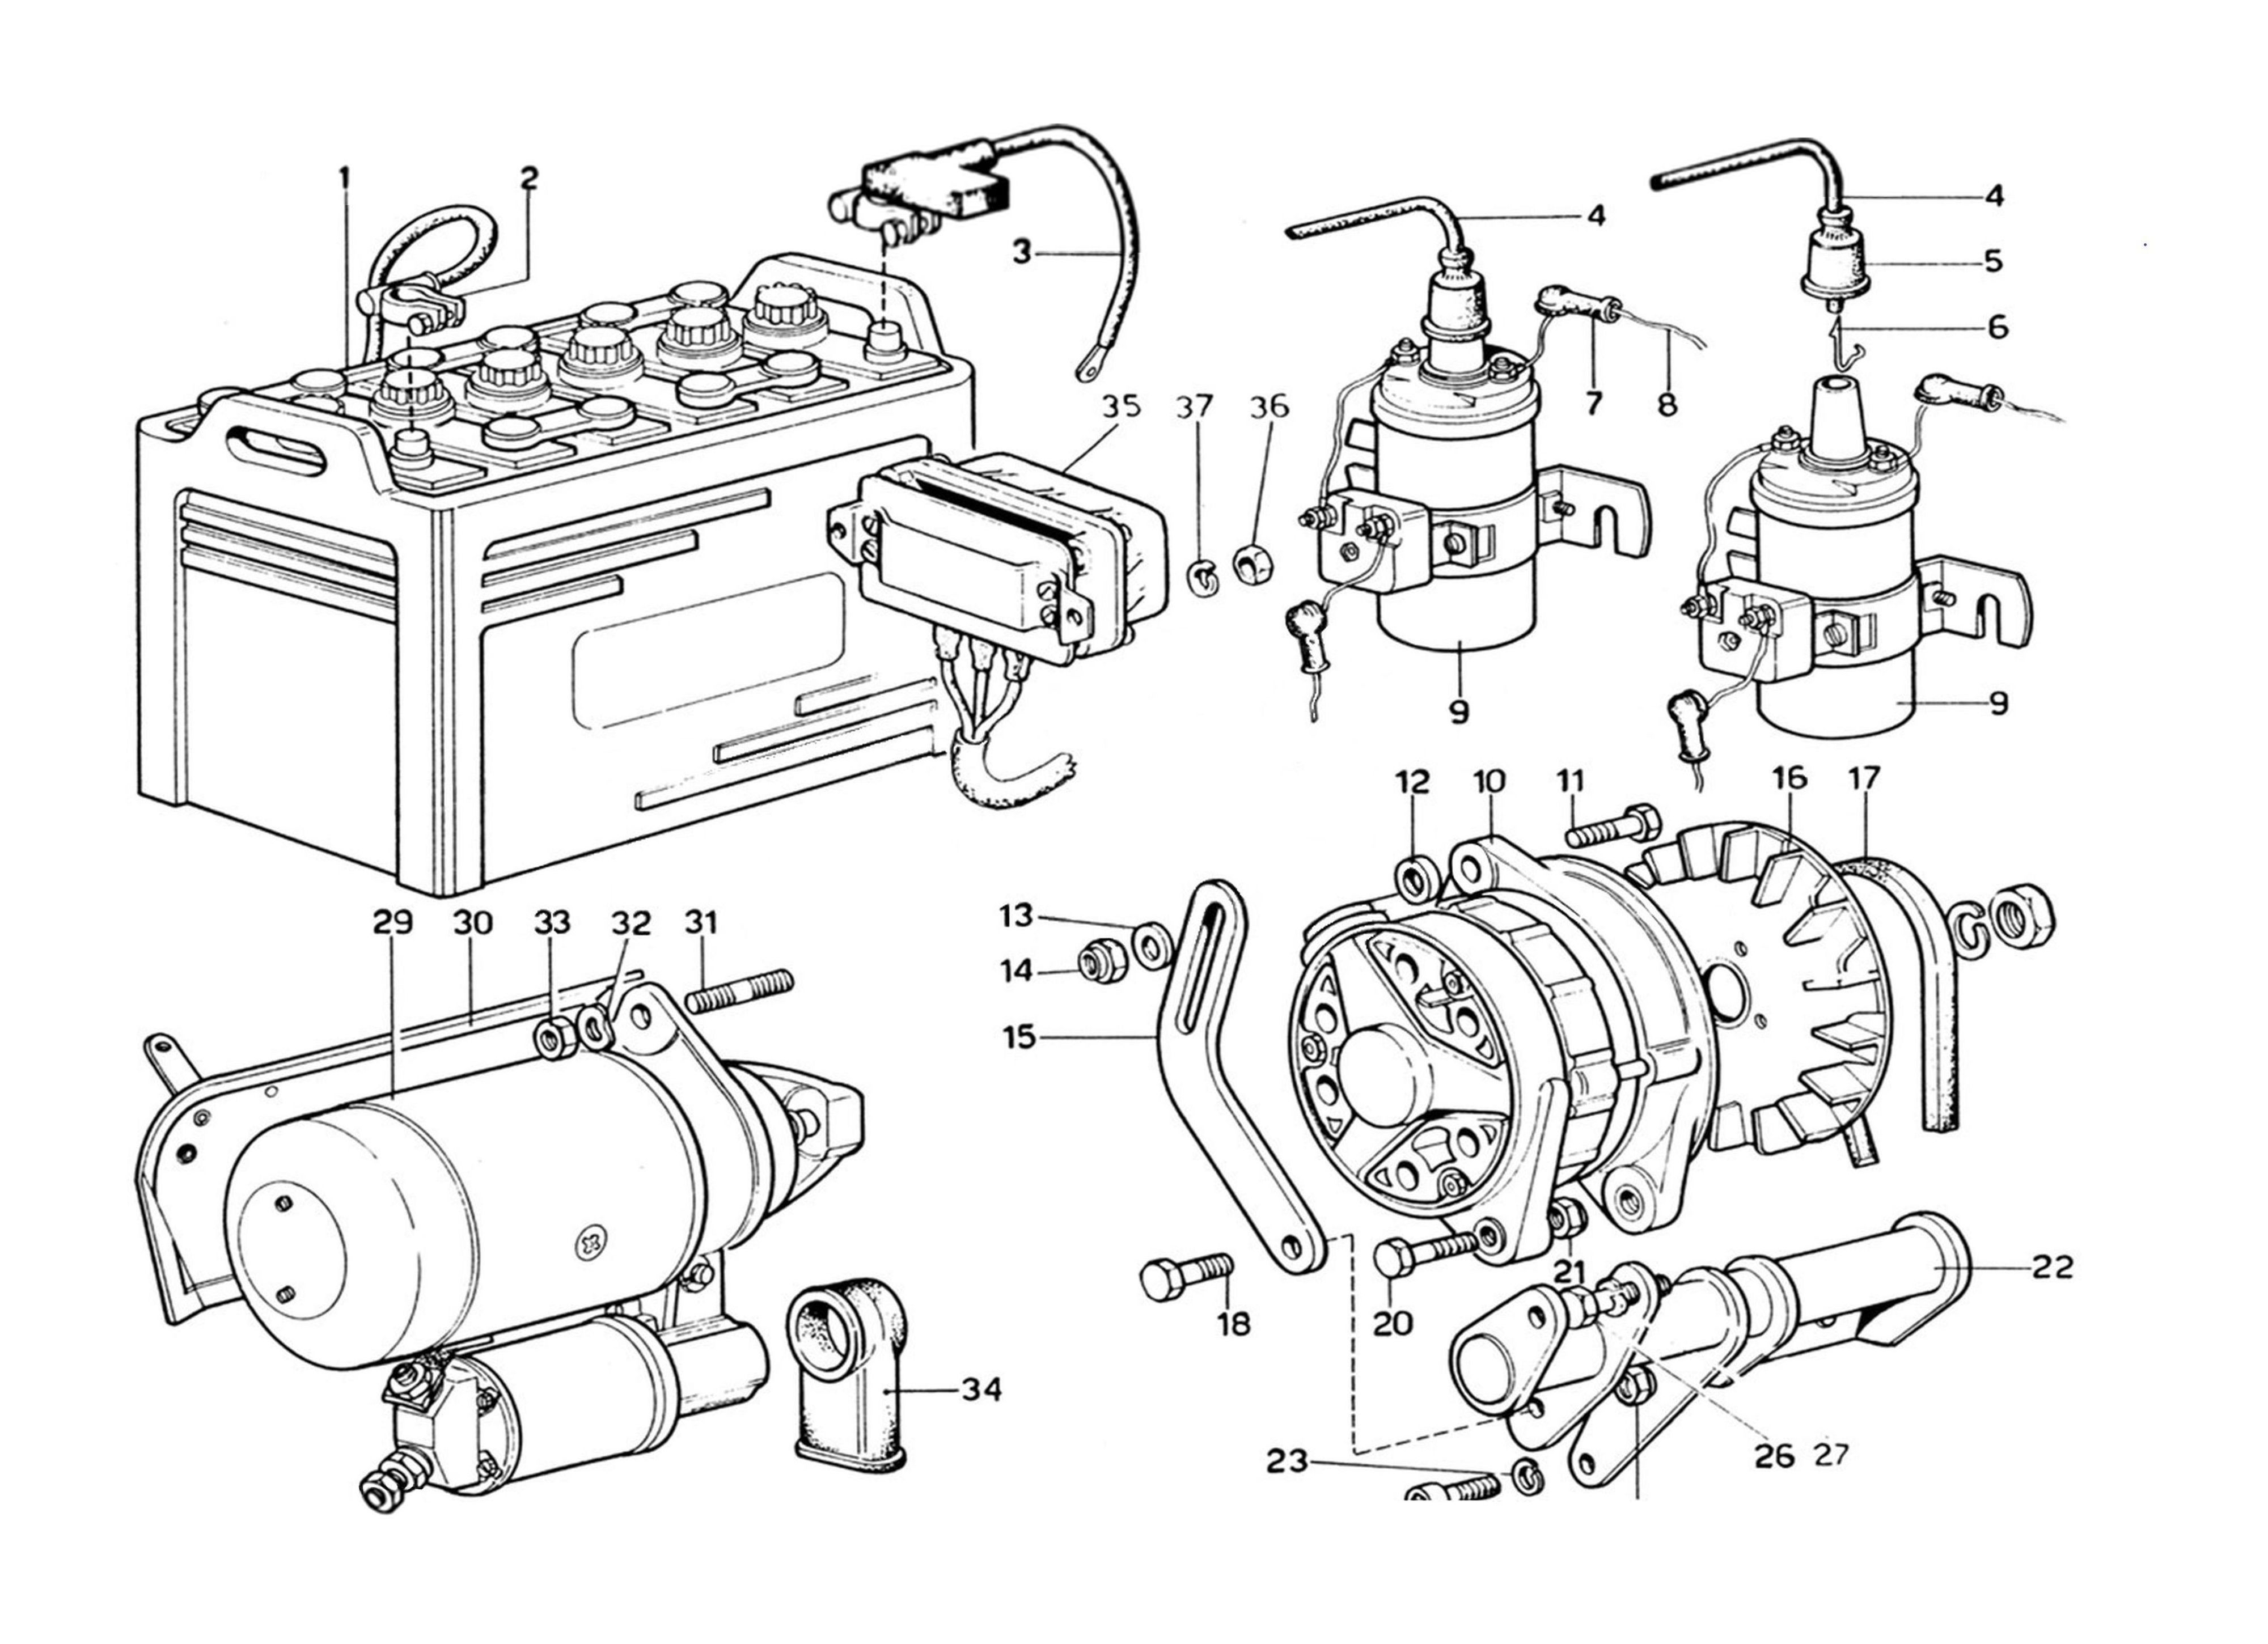 Schematic: Generator, Accumulator Coils & Starter (1974 Revision)